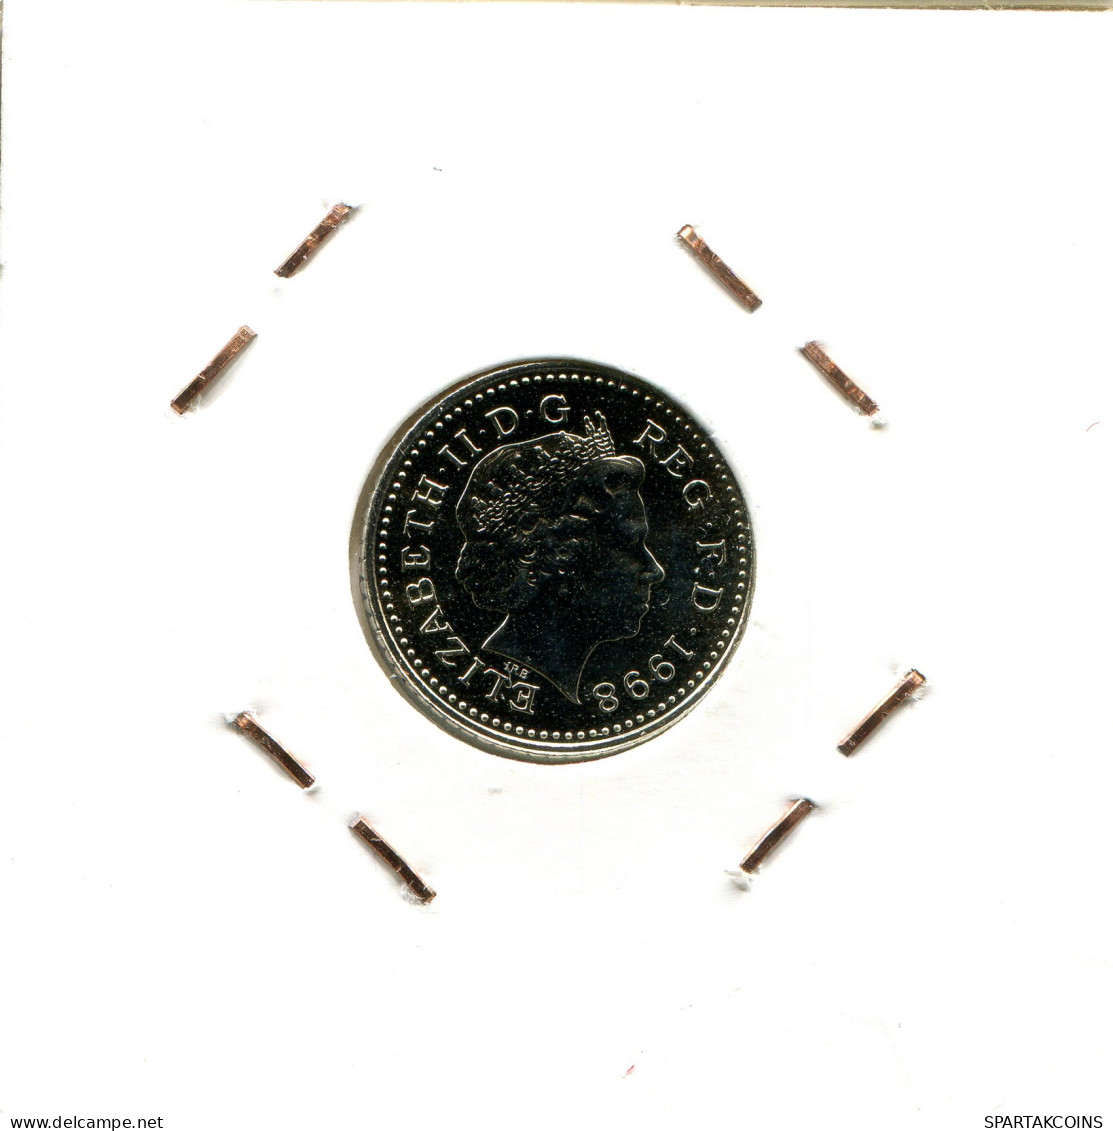 5 PENCE 1998 UK GBAN BRETAÑA GREAT BRITAIN Moneda #AW208.E - 5 Pence & 5 New Pence